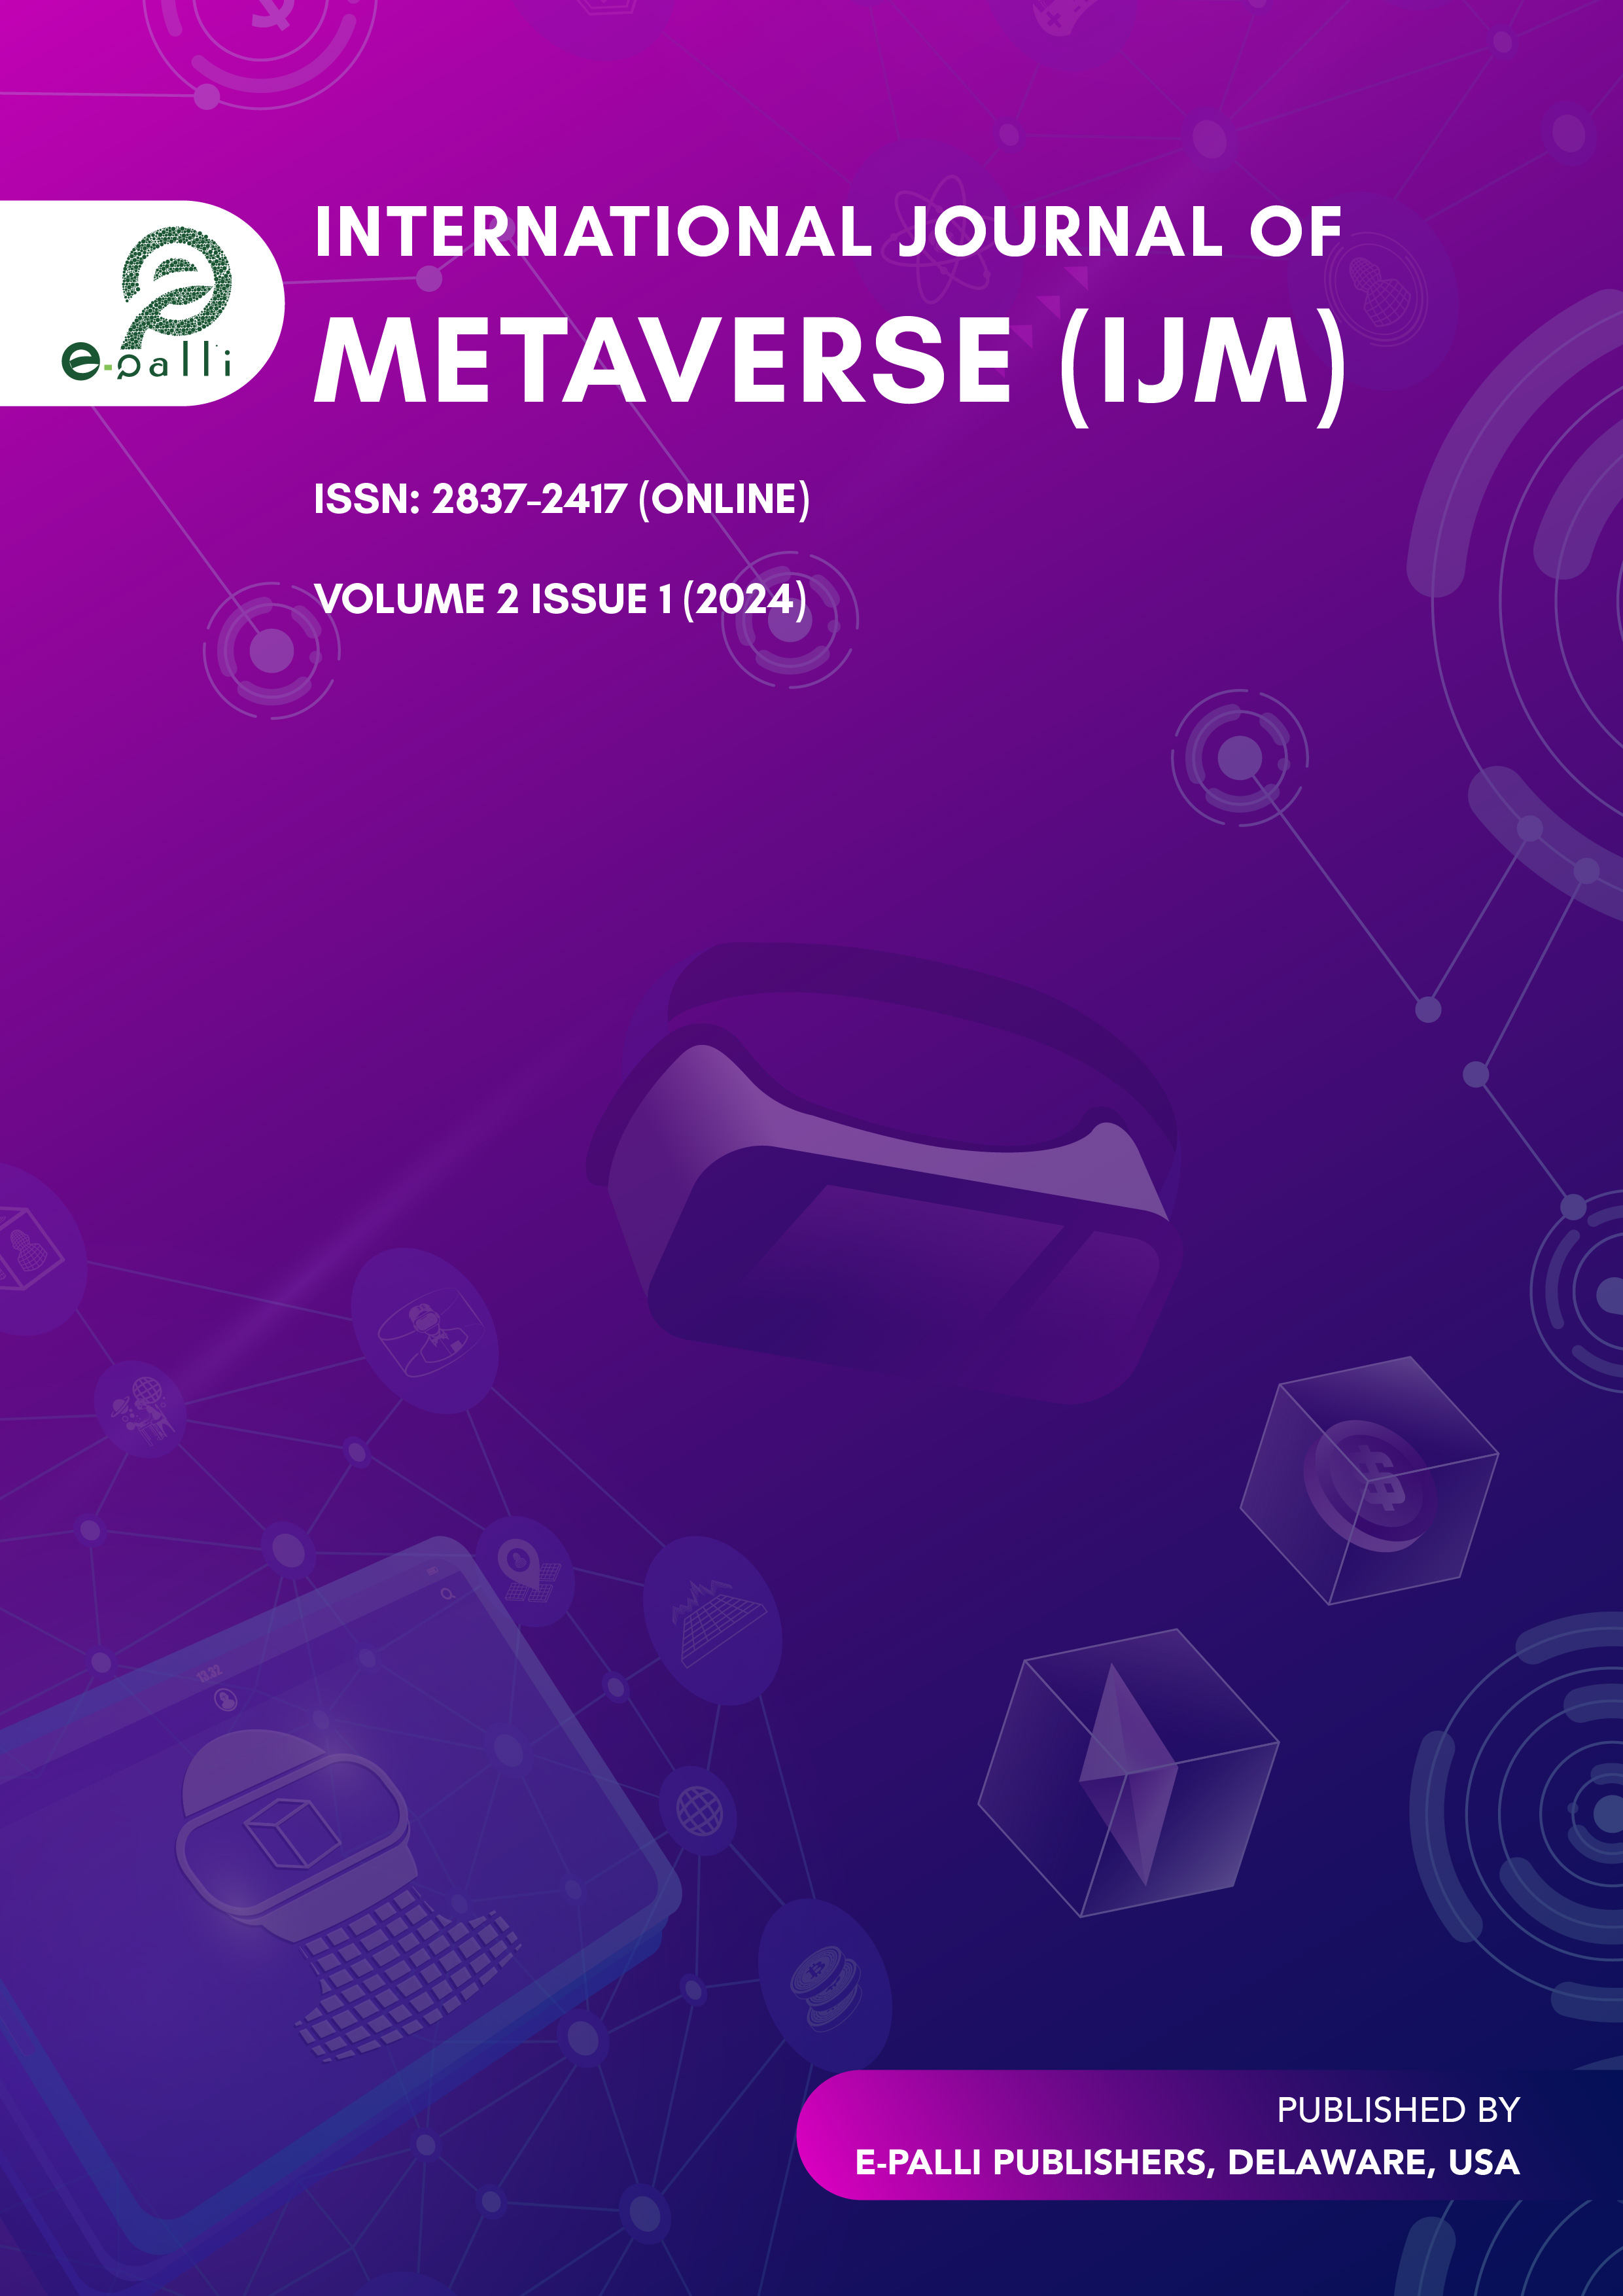                     View Vol. 2 No. 1 (2024): International Journal of Metaverse
                